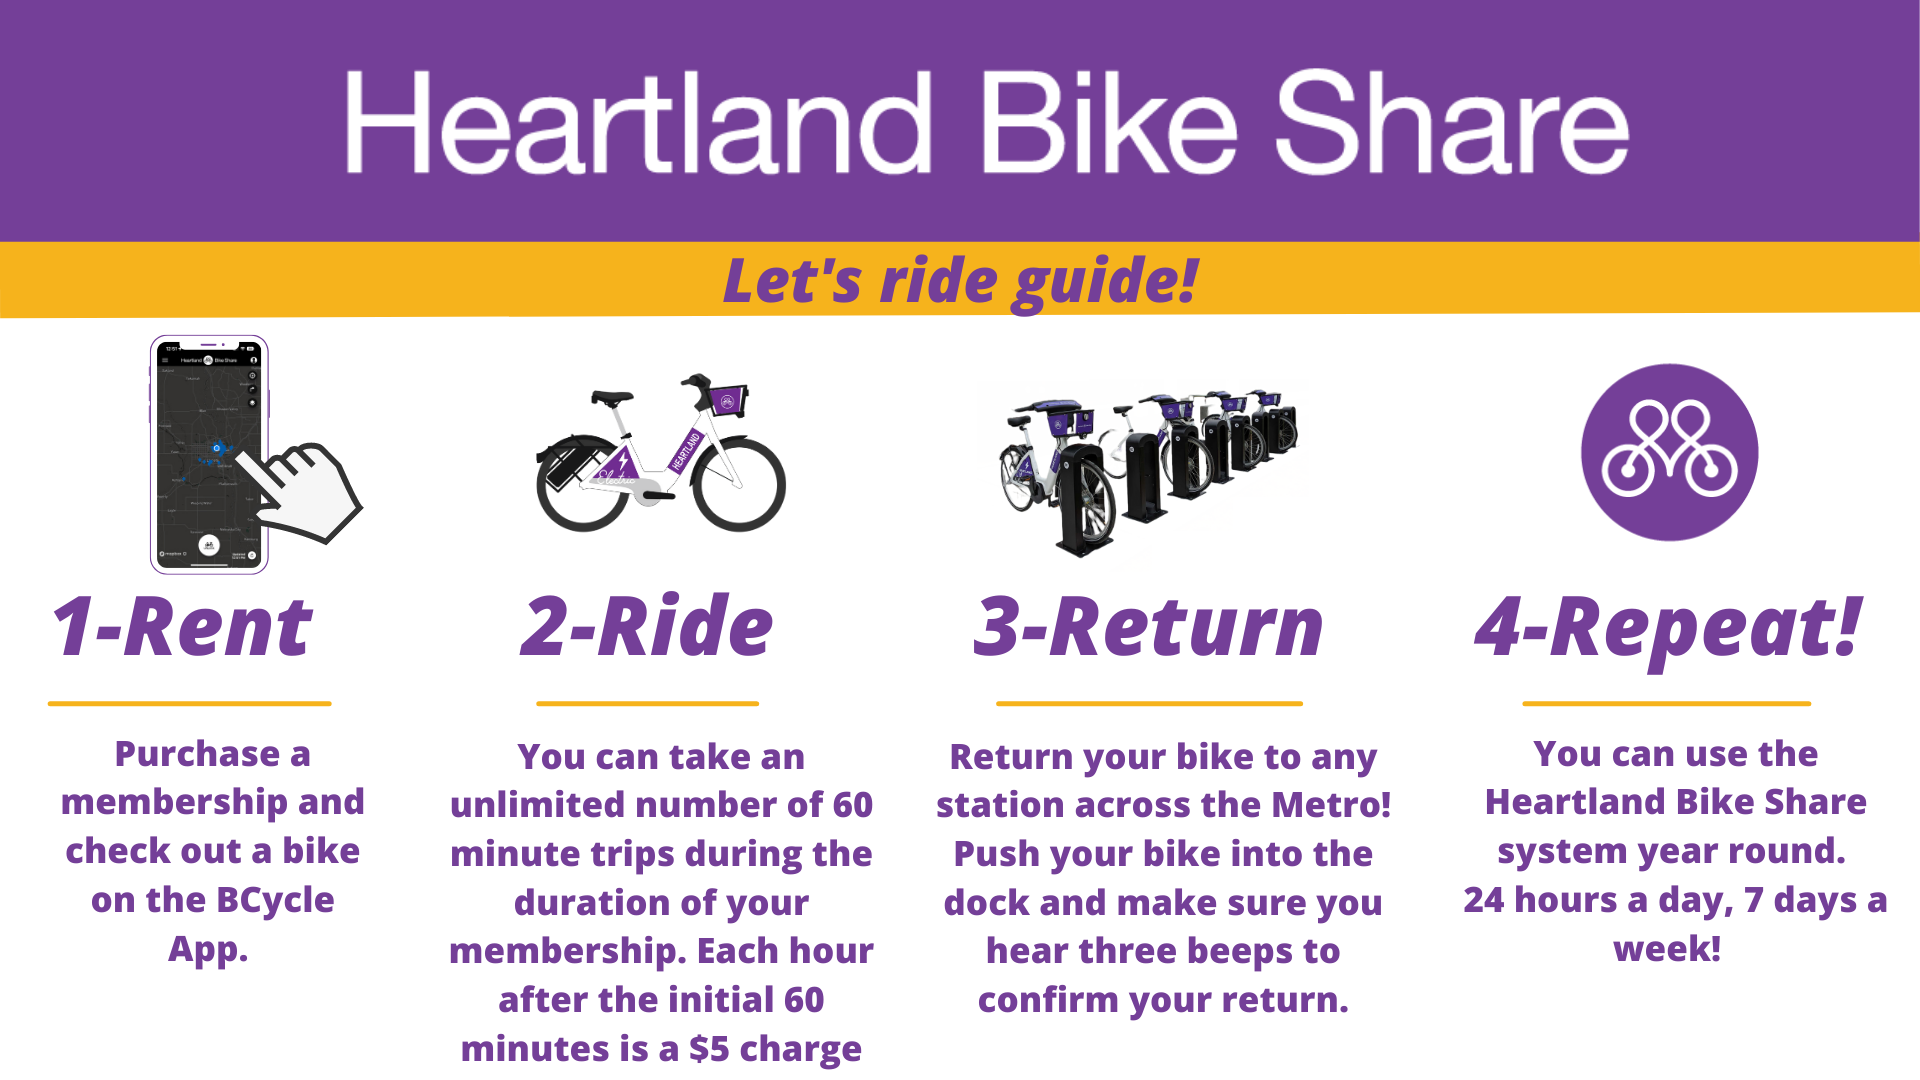 Heartland Bike Share ride guide